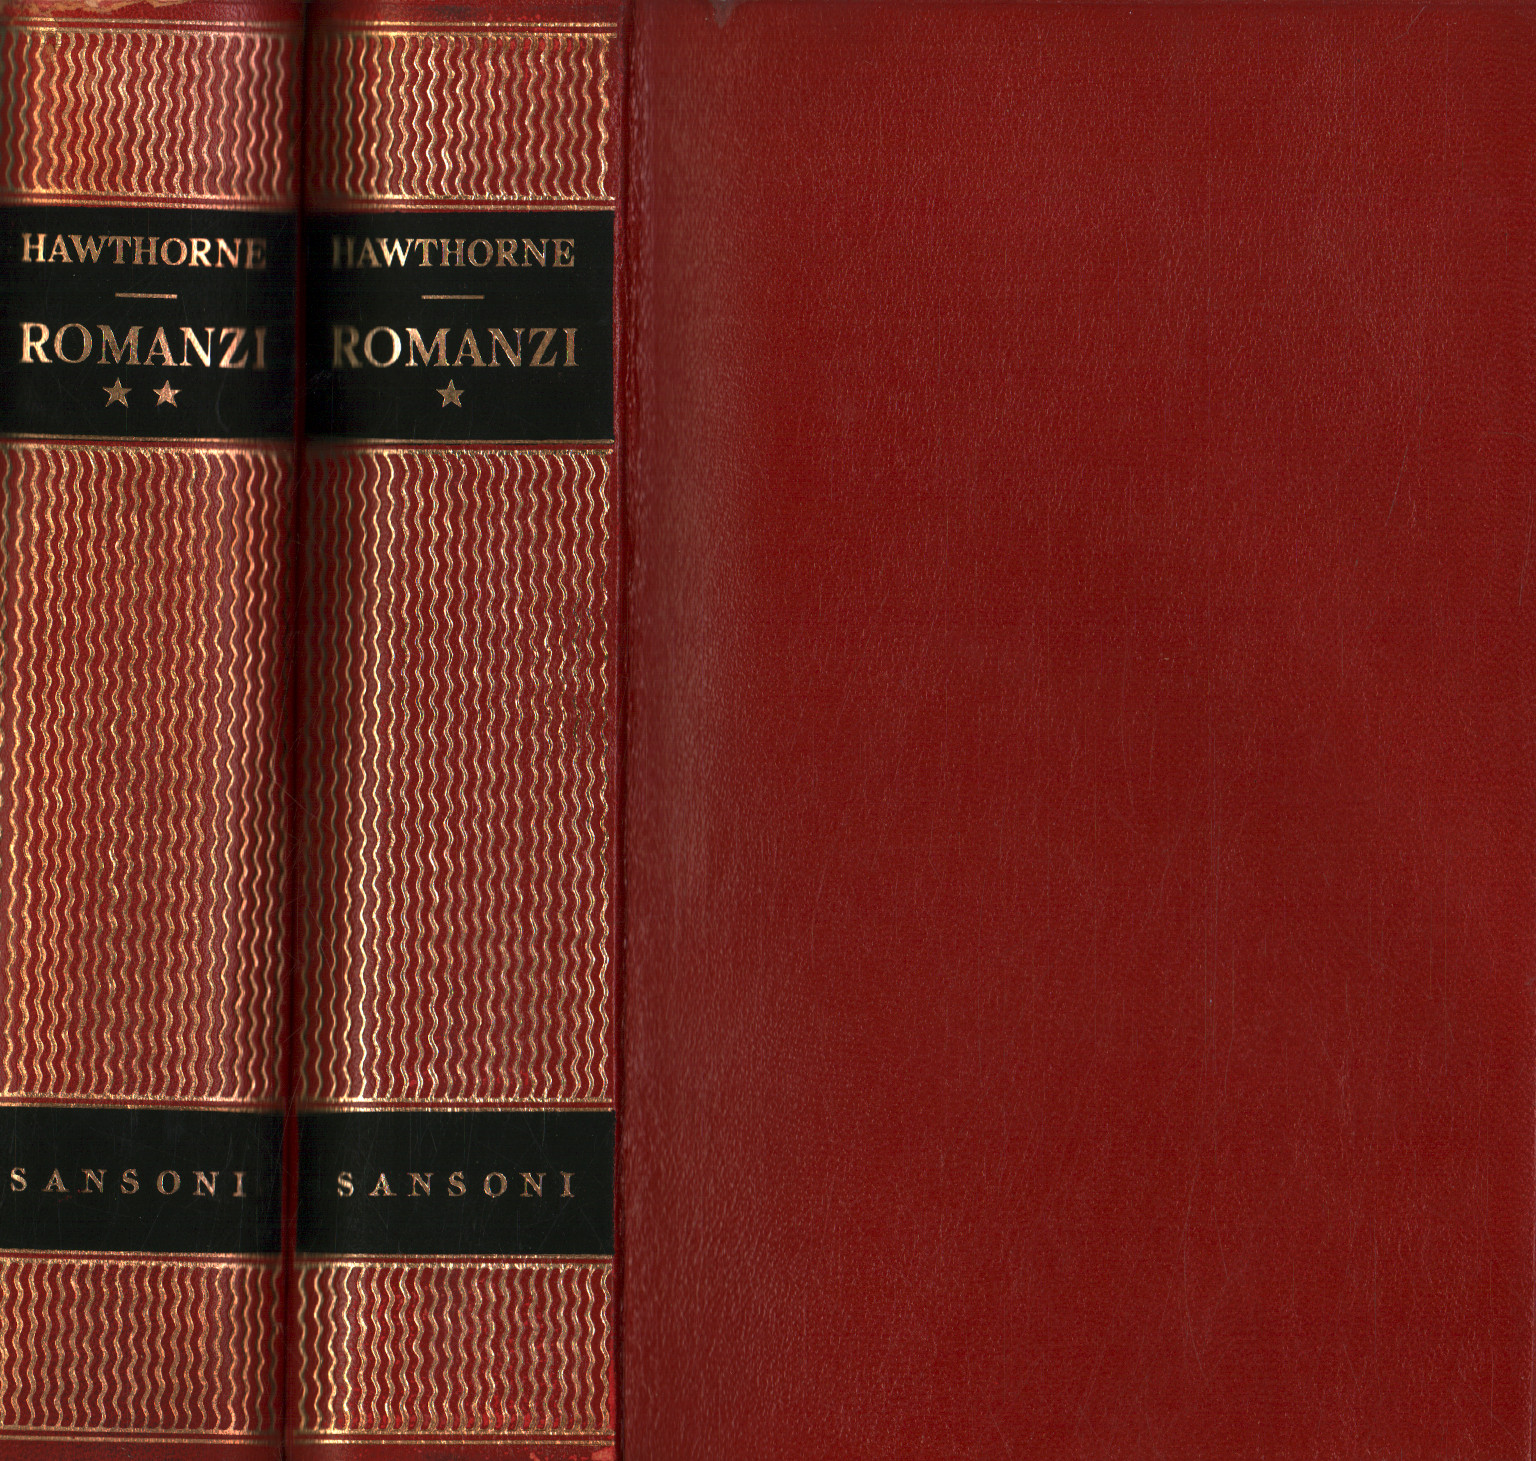 Romans (2 volumes)